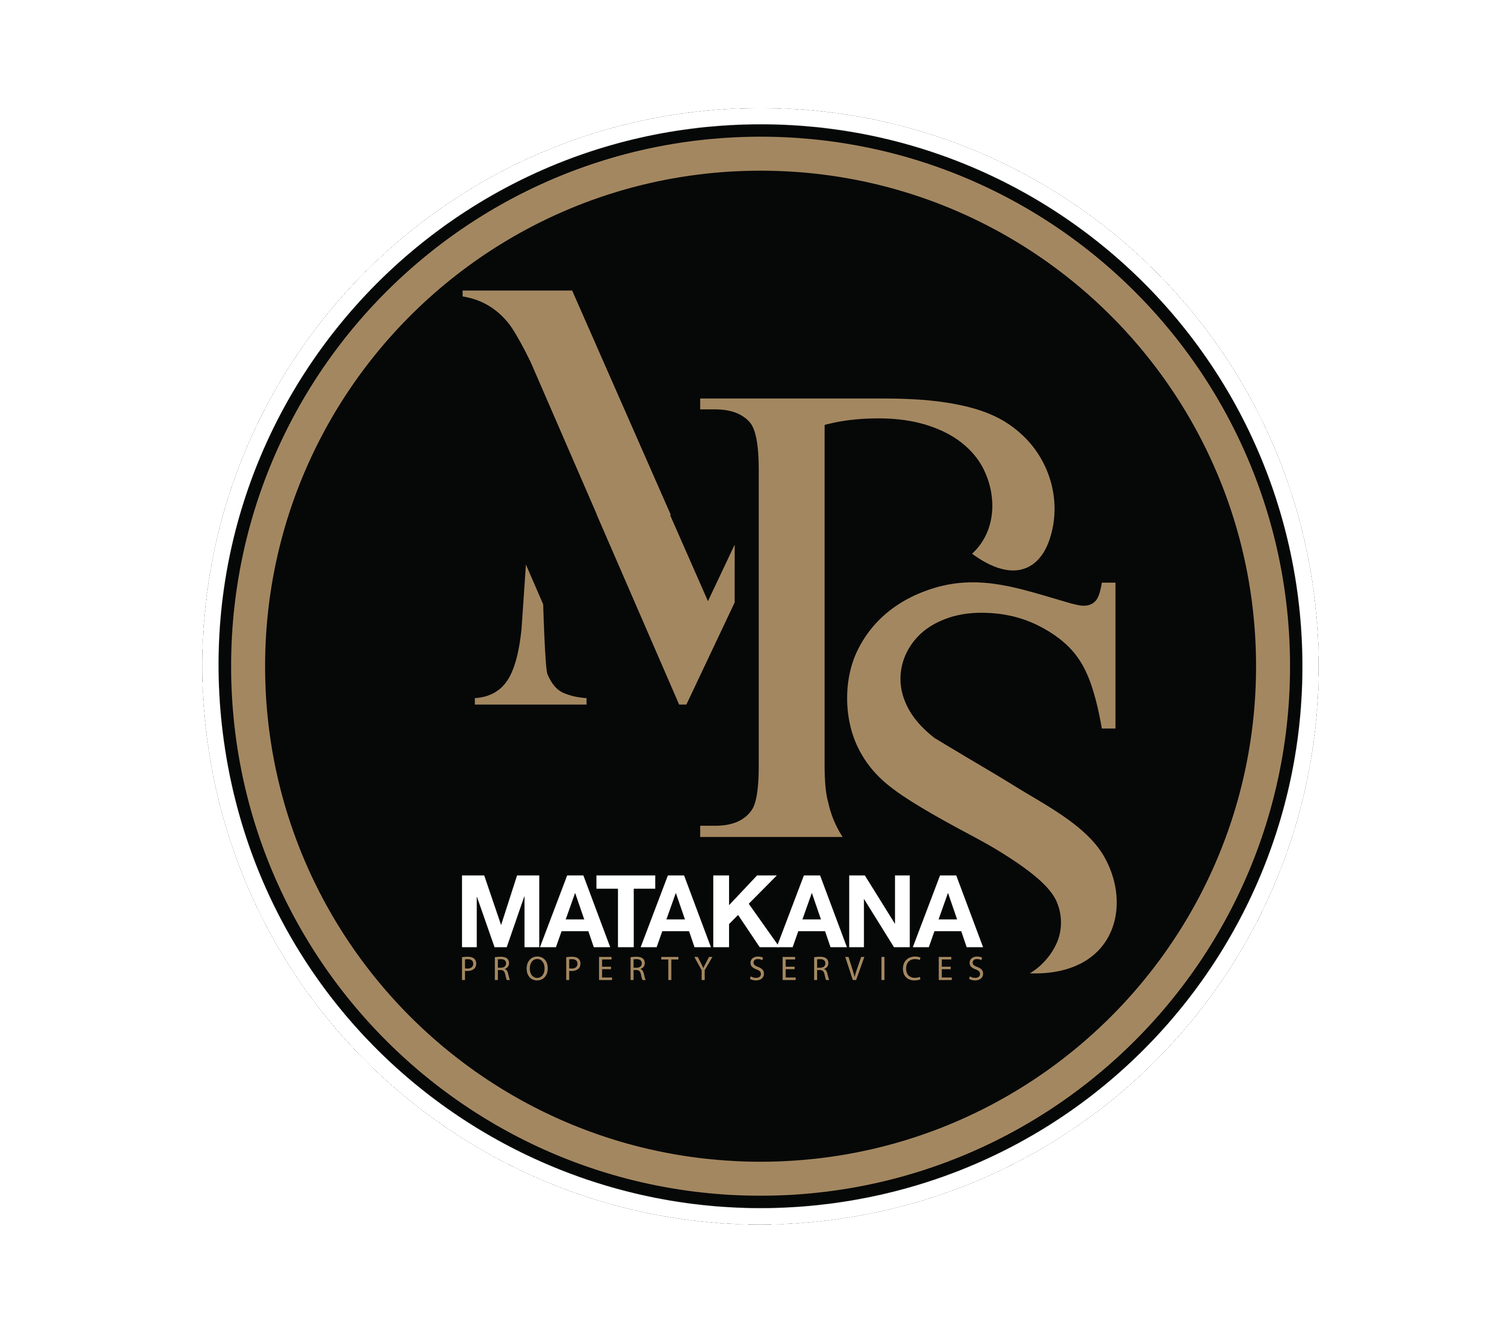 MATAKANA PROPERTY SERVICES